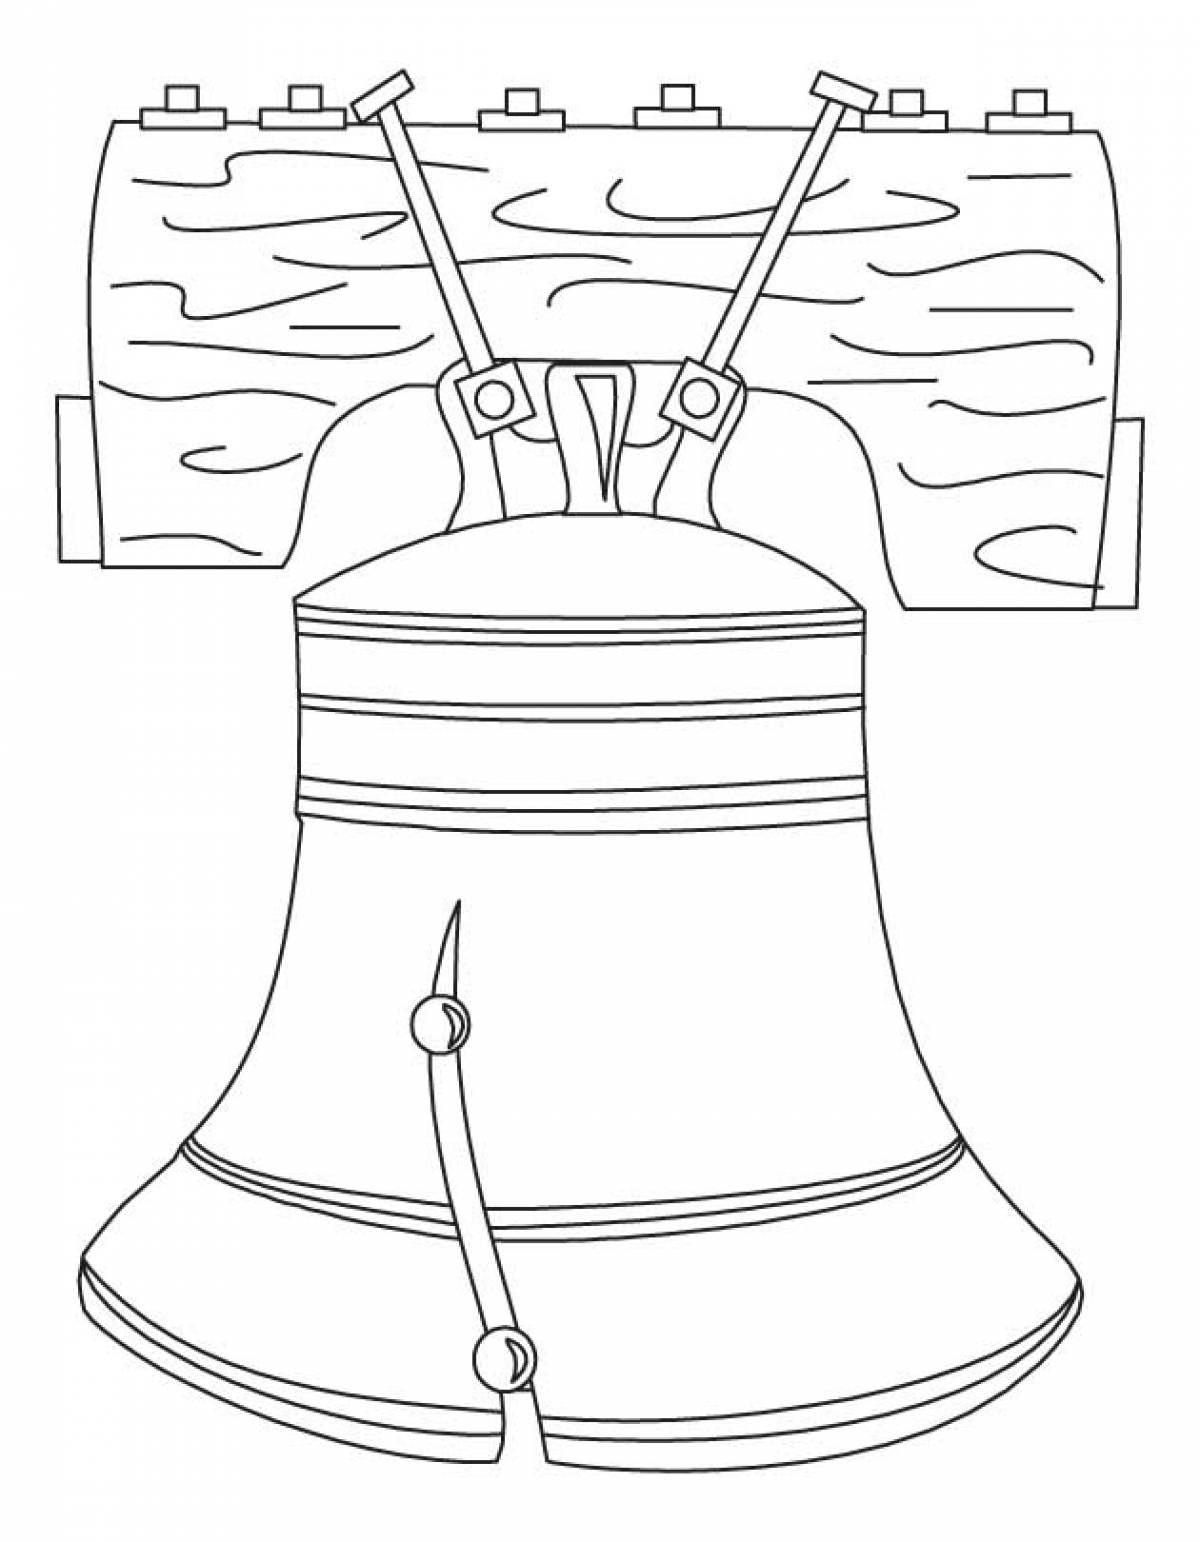 Figure bell